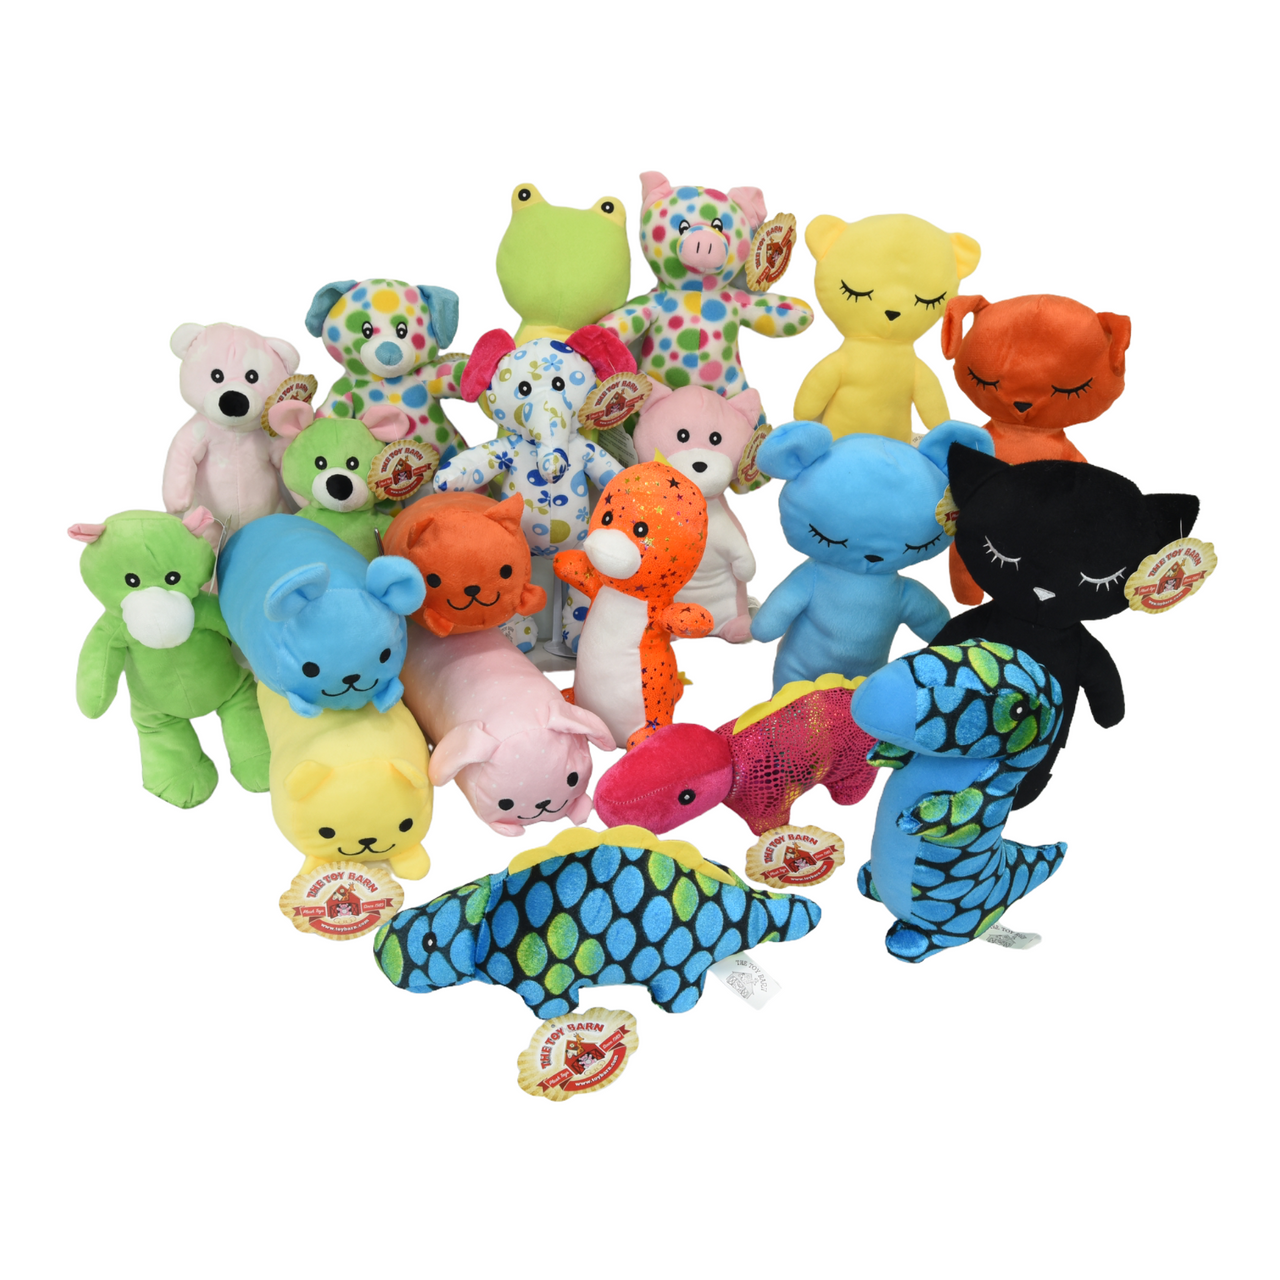 TOYBARN: Stuffed Animal Plush Toy Variety Mix (12 Inch) 12 to 200